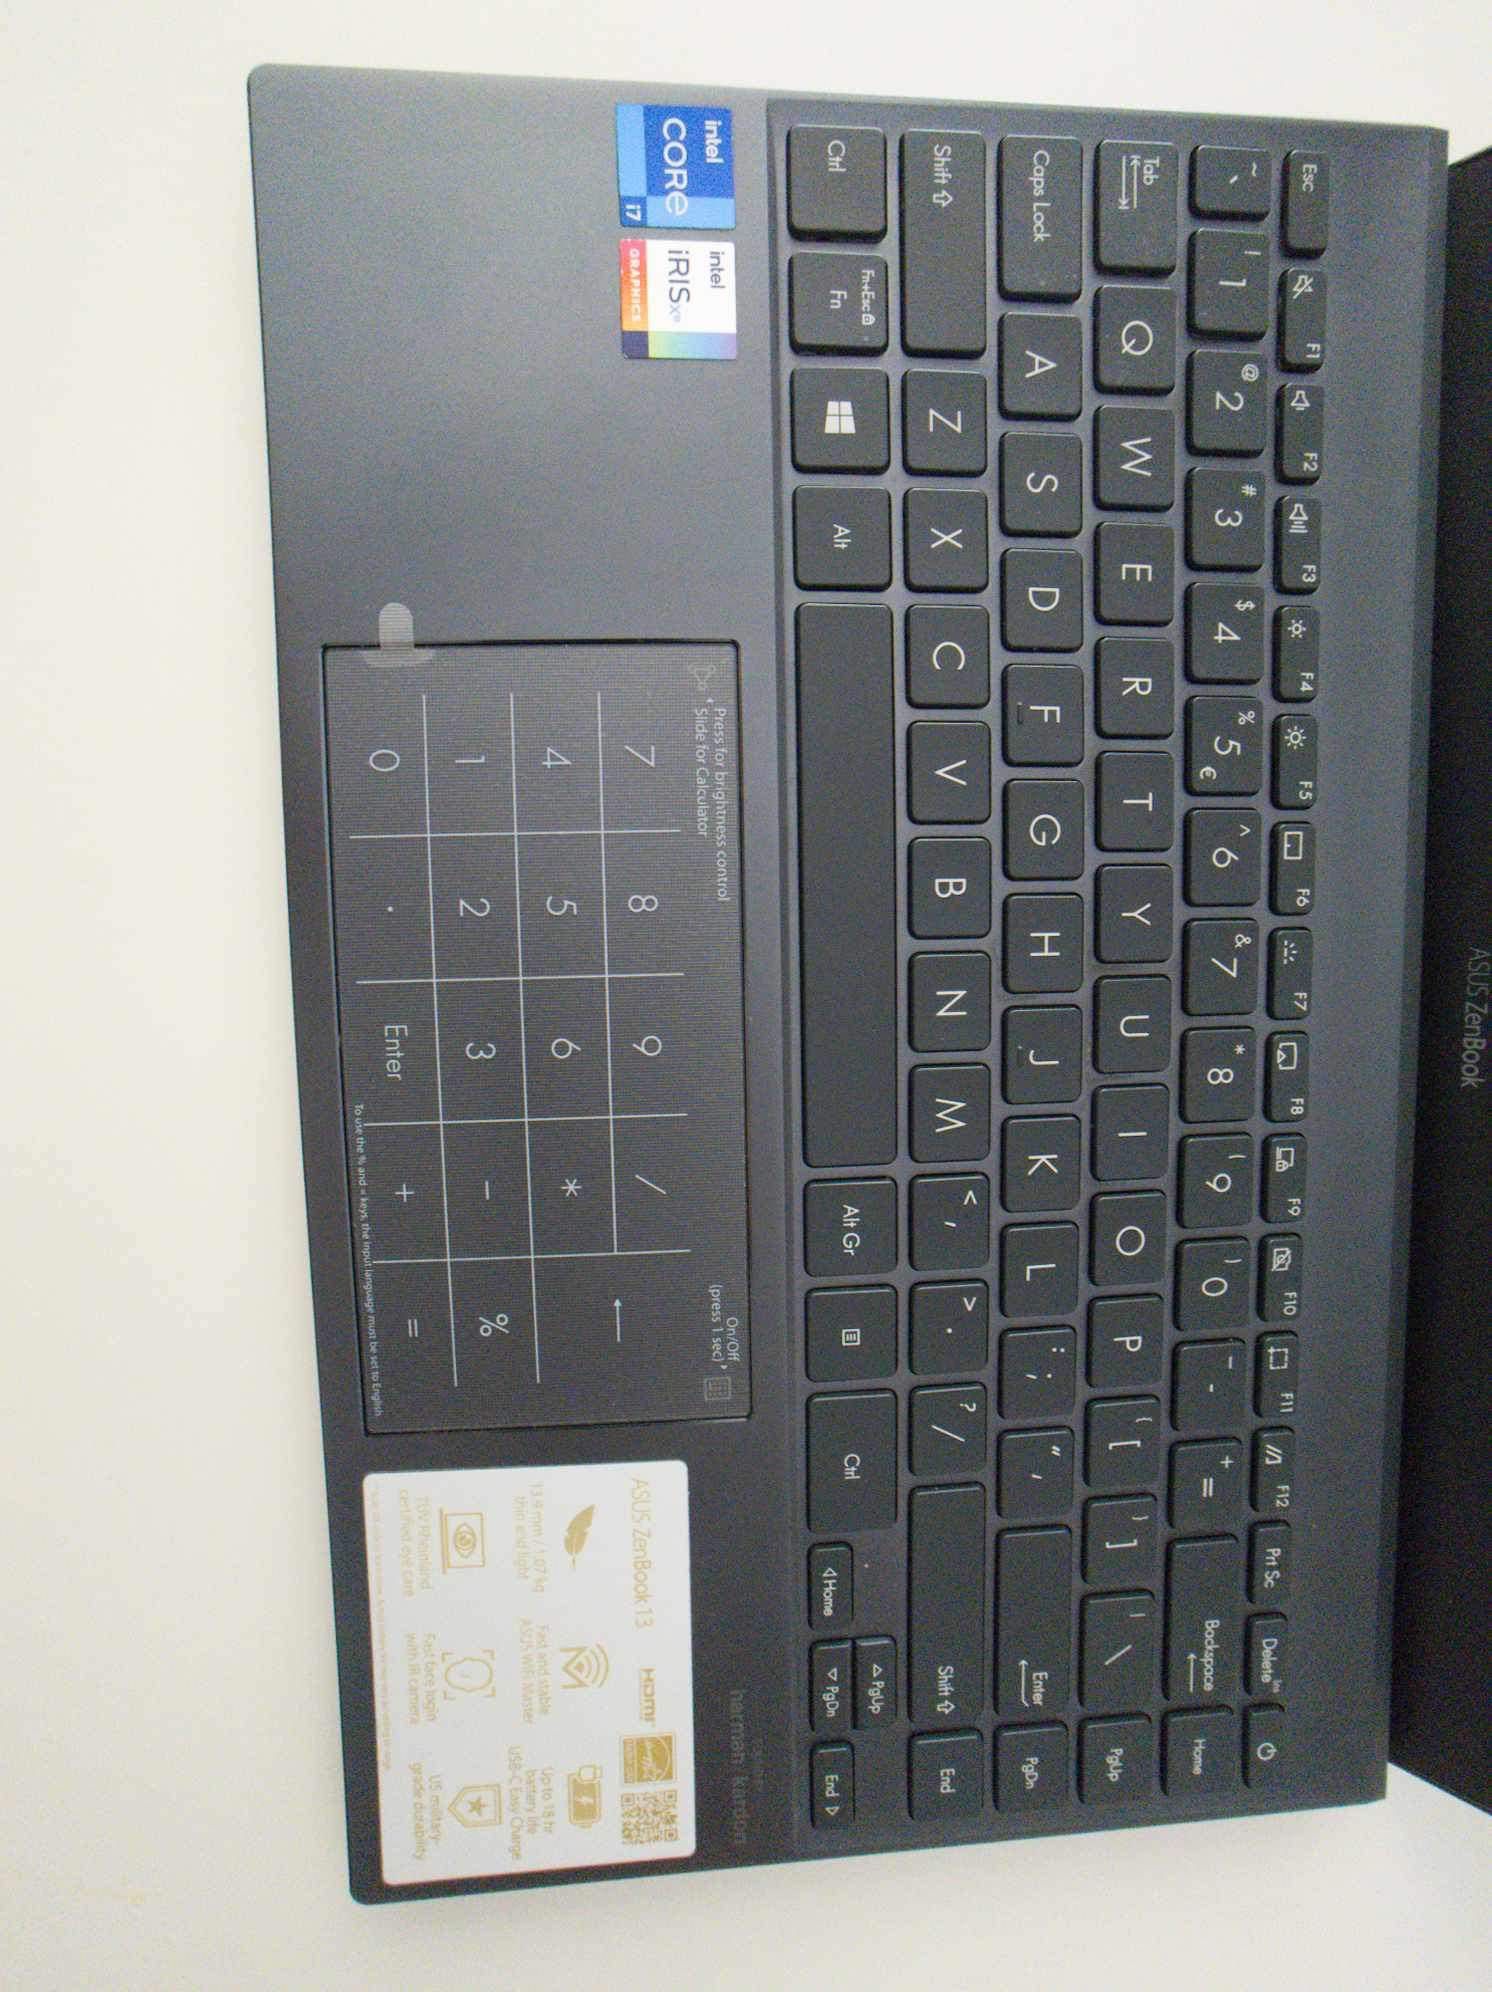 Laptop Asus Zenbook UX325EA